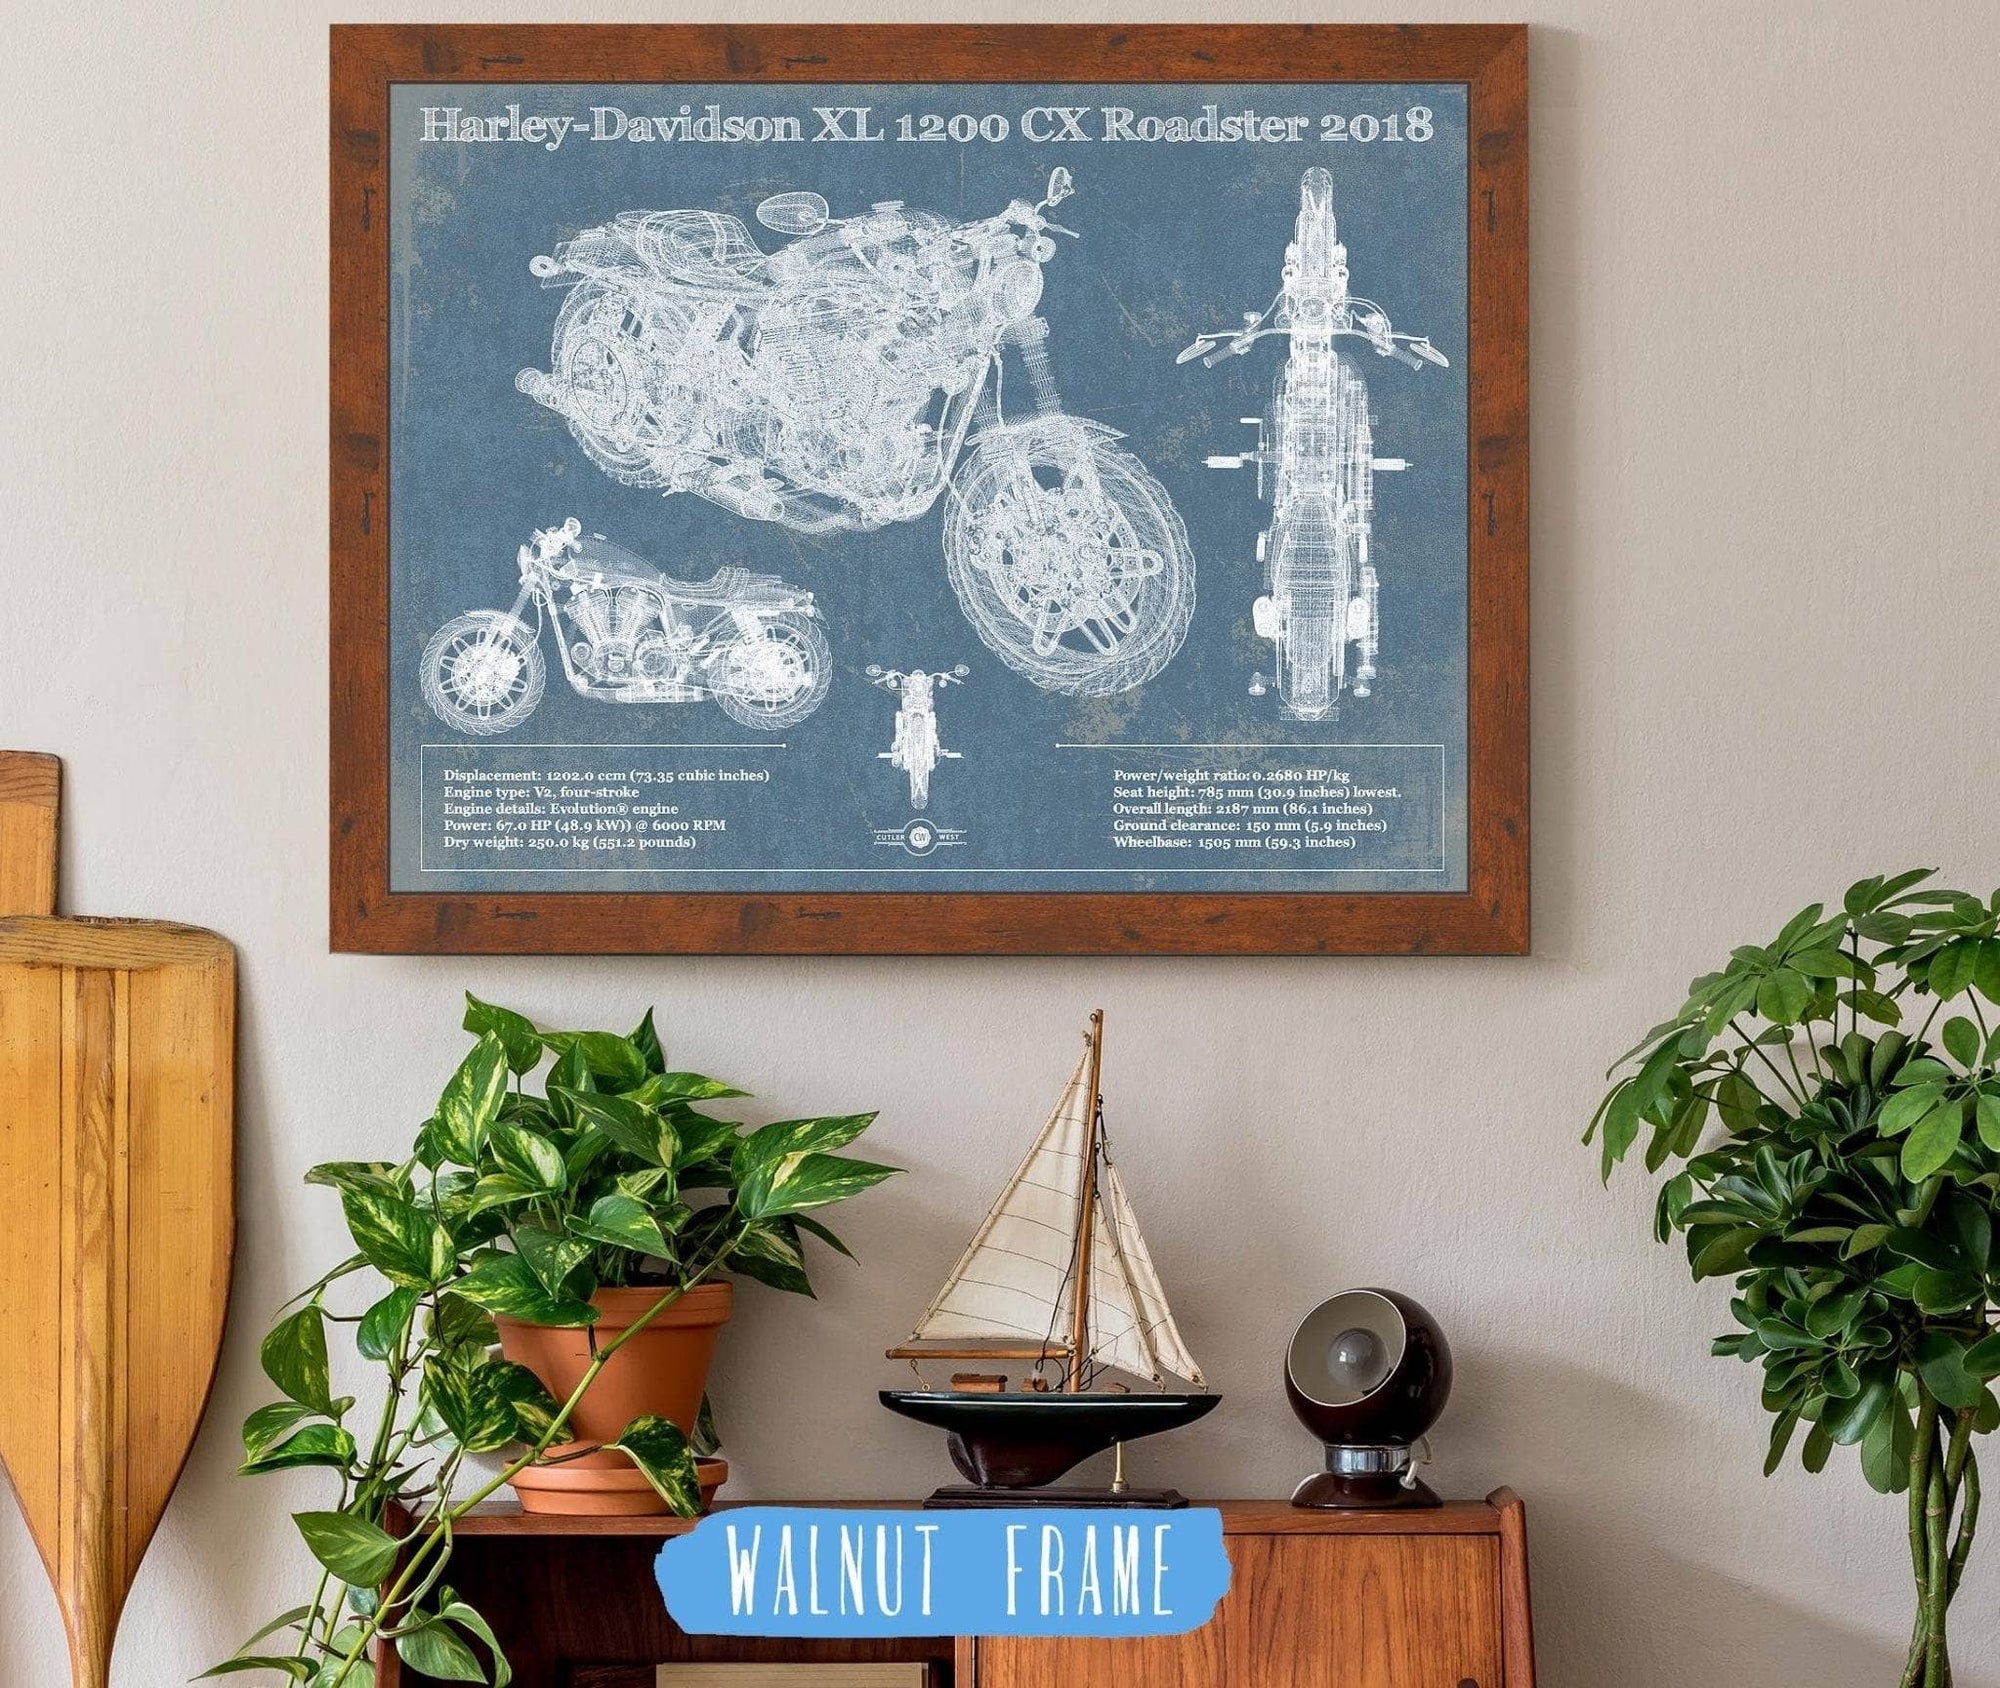 Cutler West 14" x 11" / Walnut Frame Harley-Davidson XL 1200 CX Roadster 2018 Blueprint Motorcycle Patent Print 833110145_12401